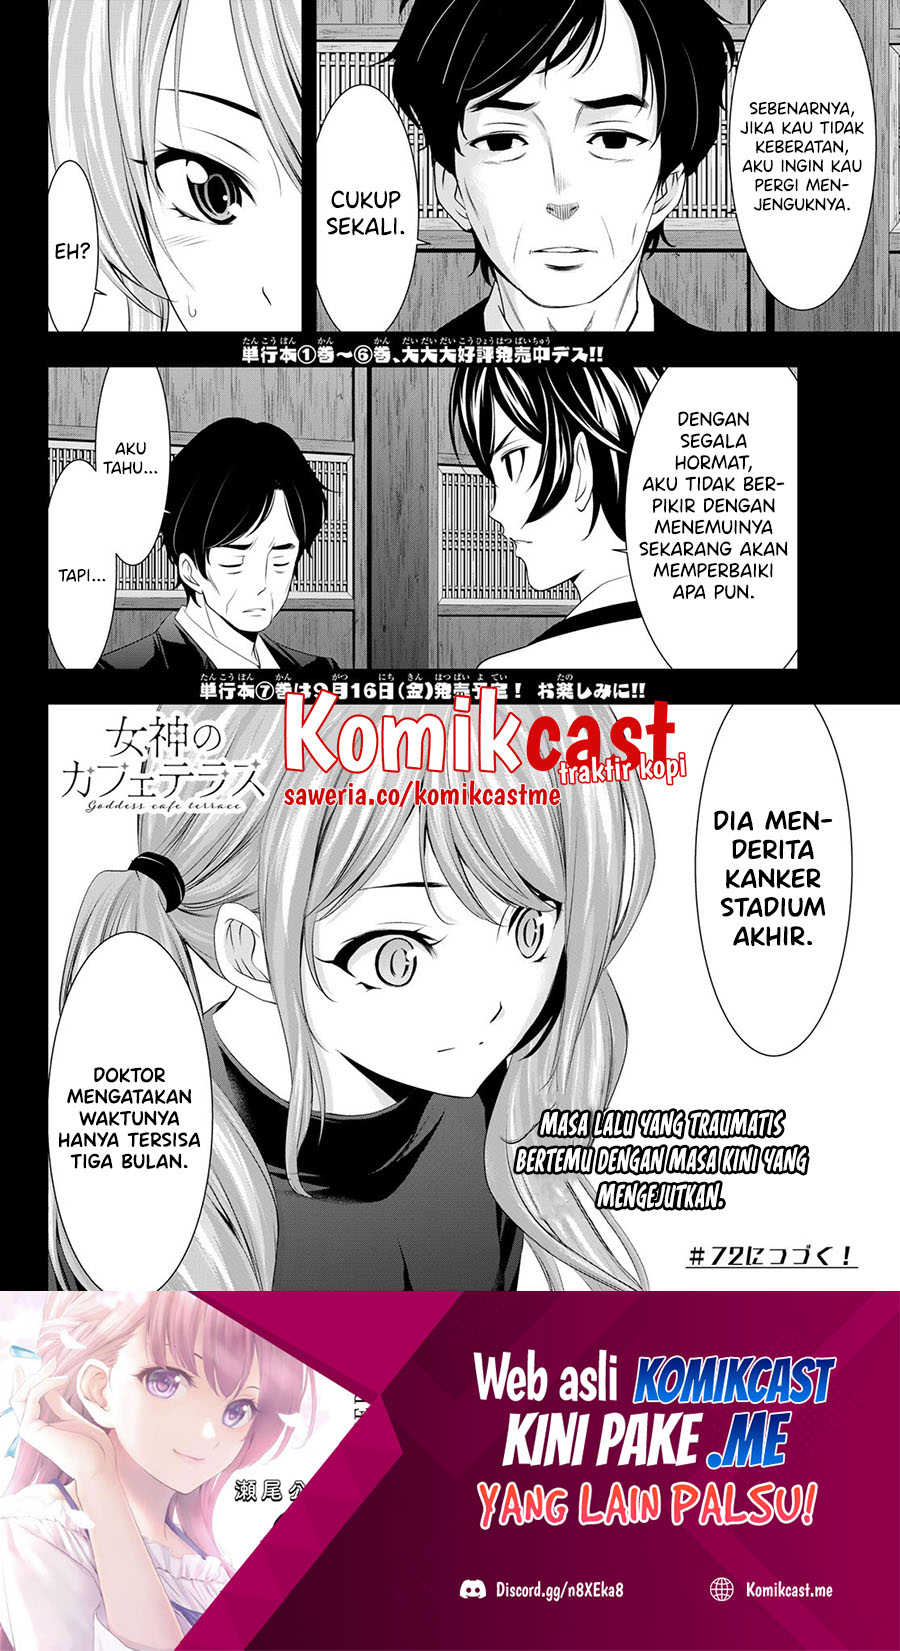 Megami no Kafeterasu (Goddess Café Terrace) Chapter 71